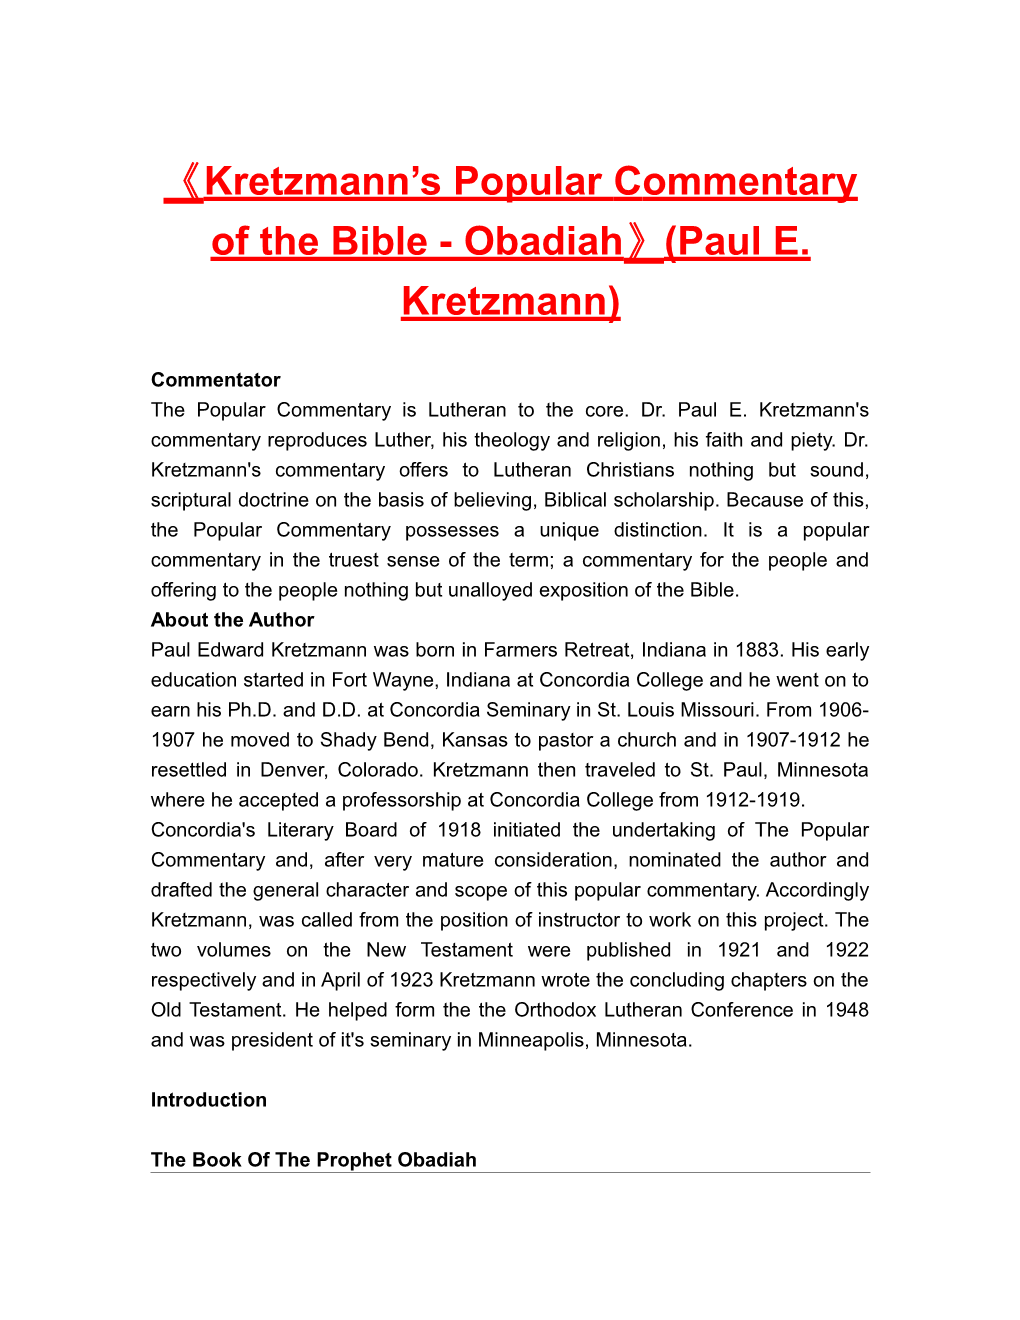 Kretzmann S Popularcommentary of the Bible-Obadiah (Paul E. Kretzmann)